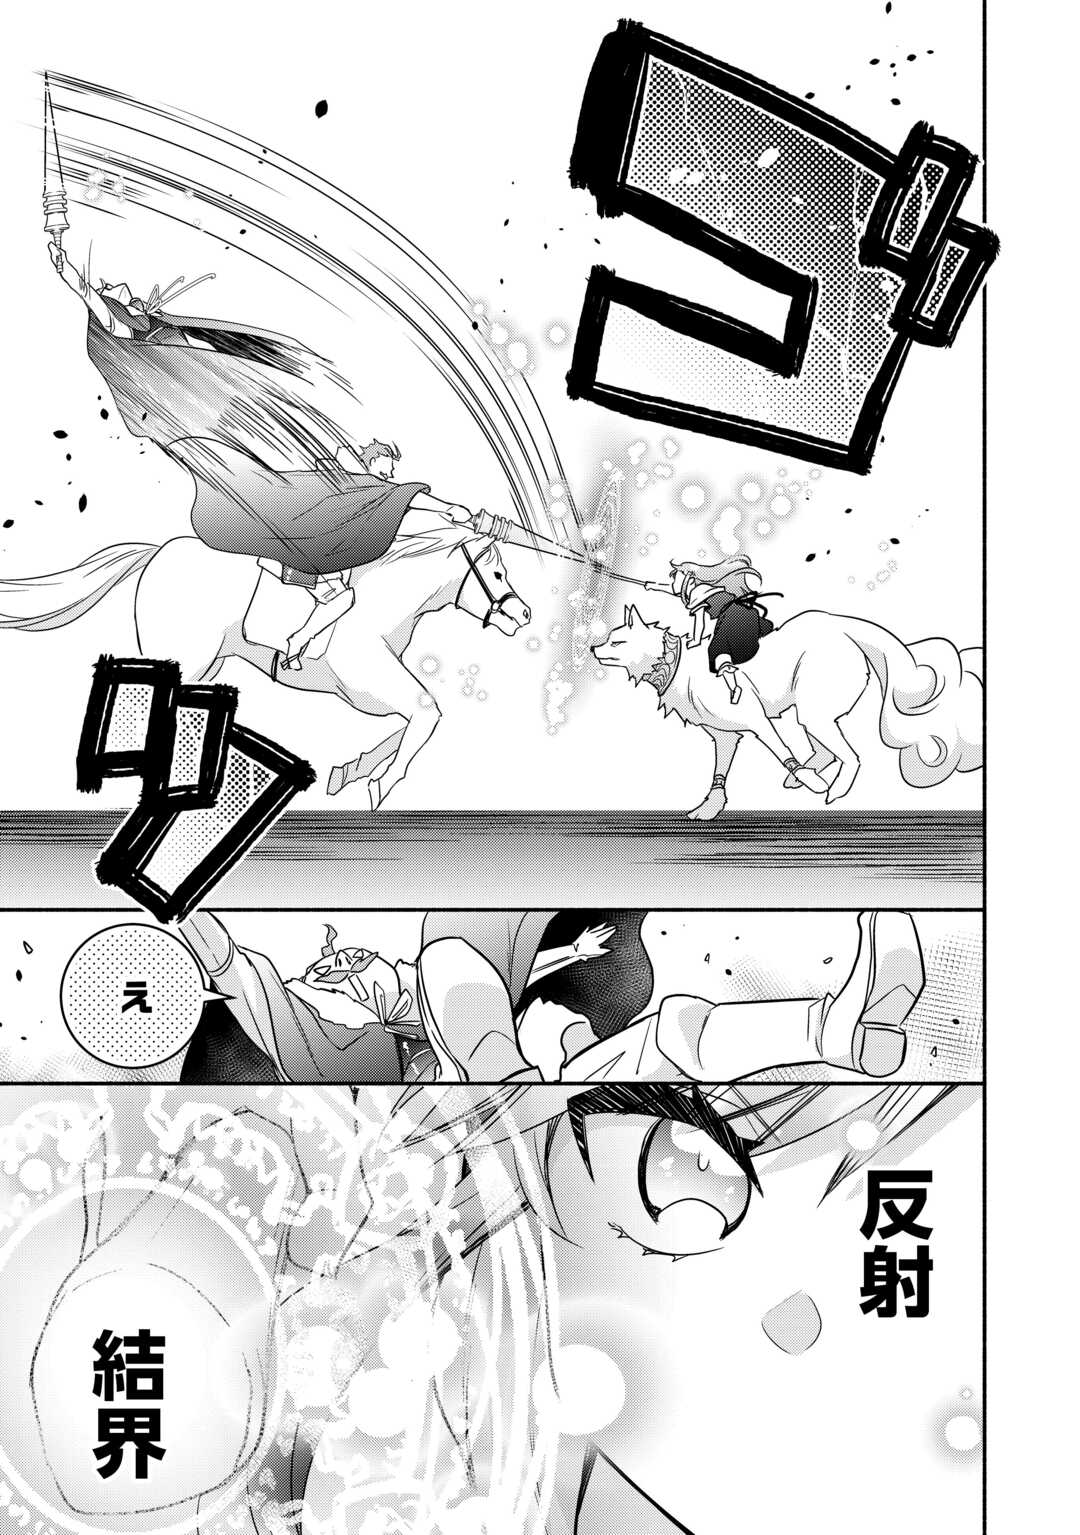 Tensei Youjo. Kamikemono to Ouji to, Saikyou no Ojisan Youhei-dan no Naka de Ikiru. - Chapter 22 - Page 7